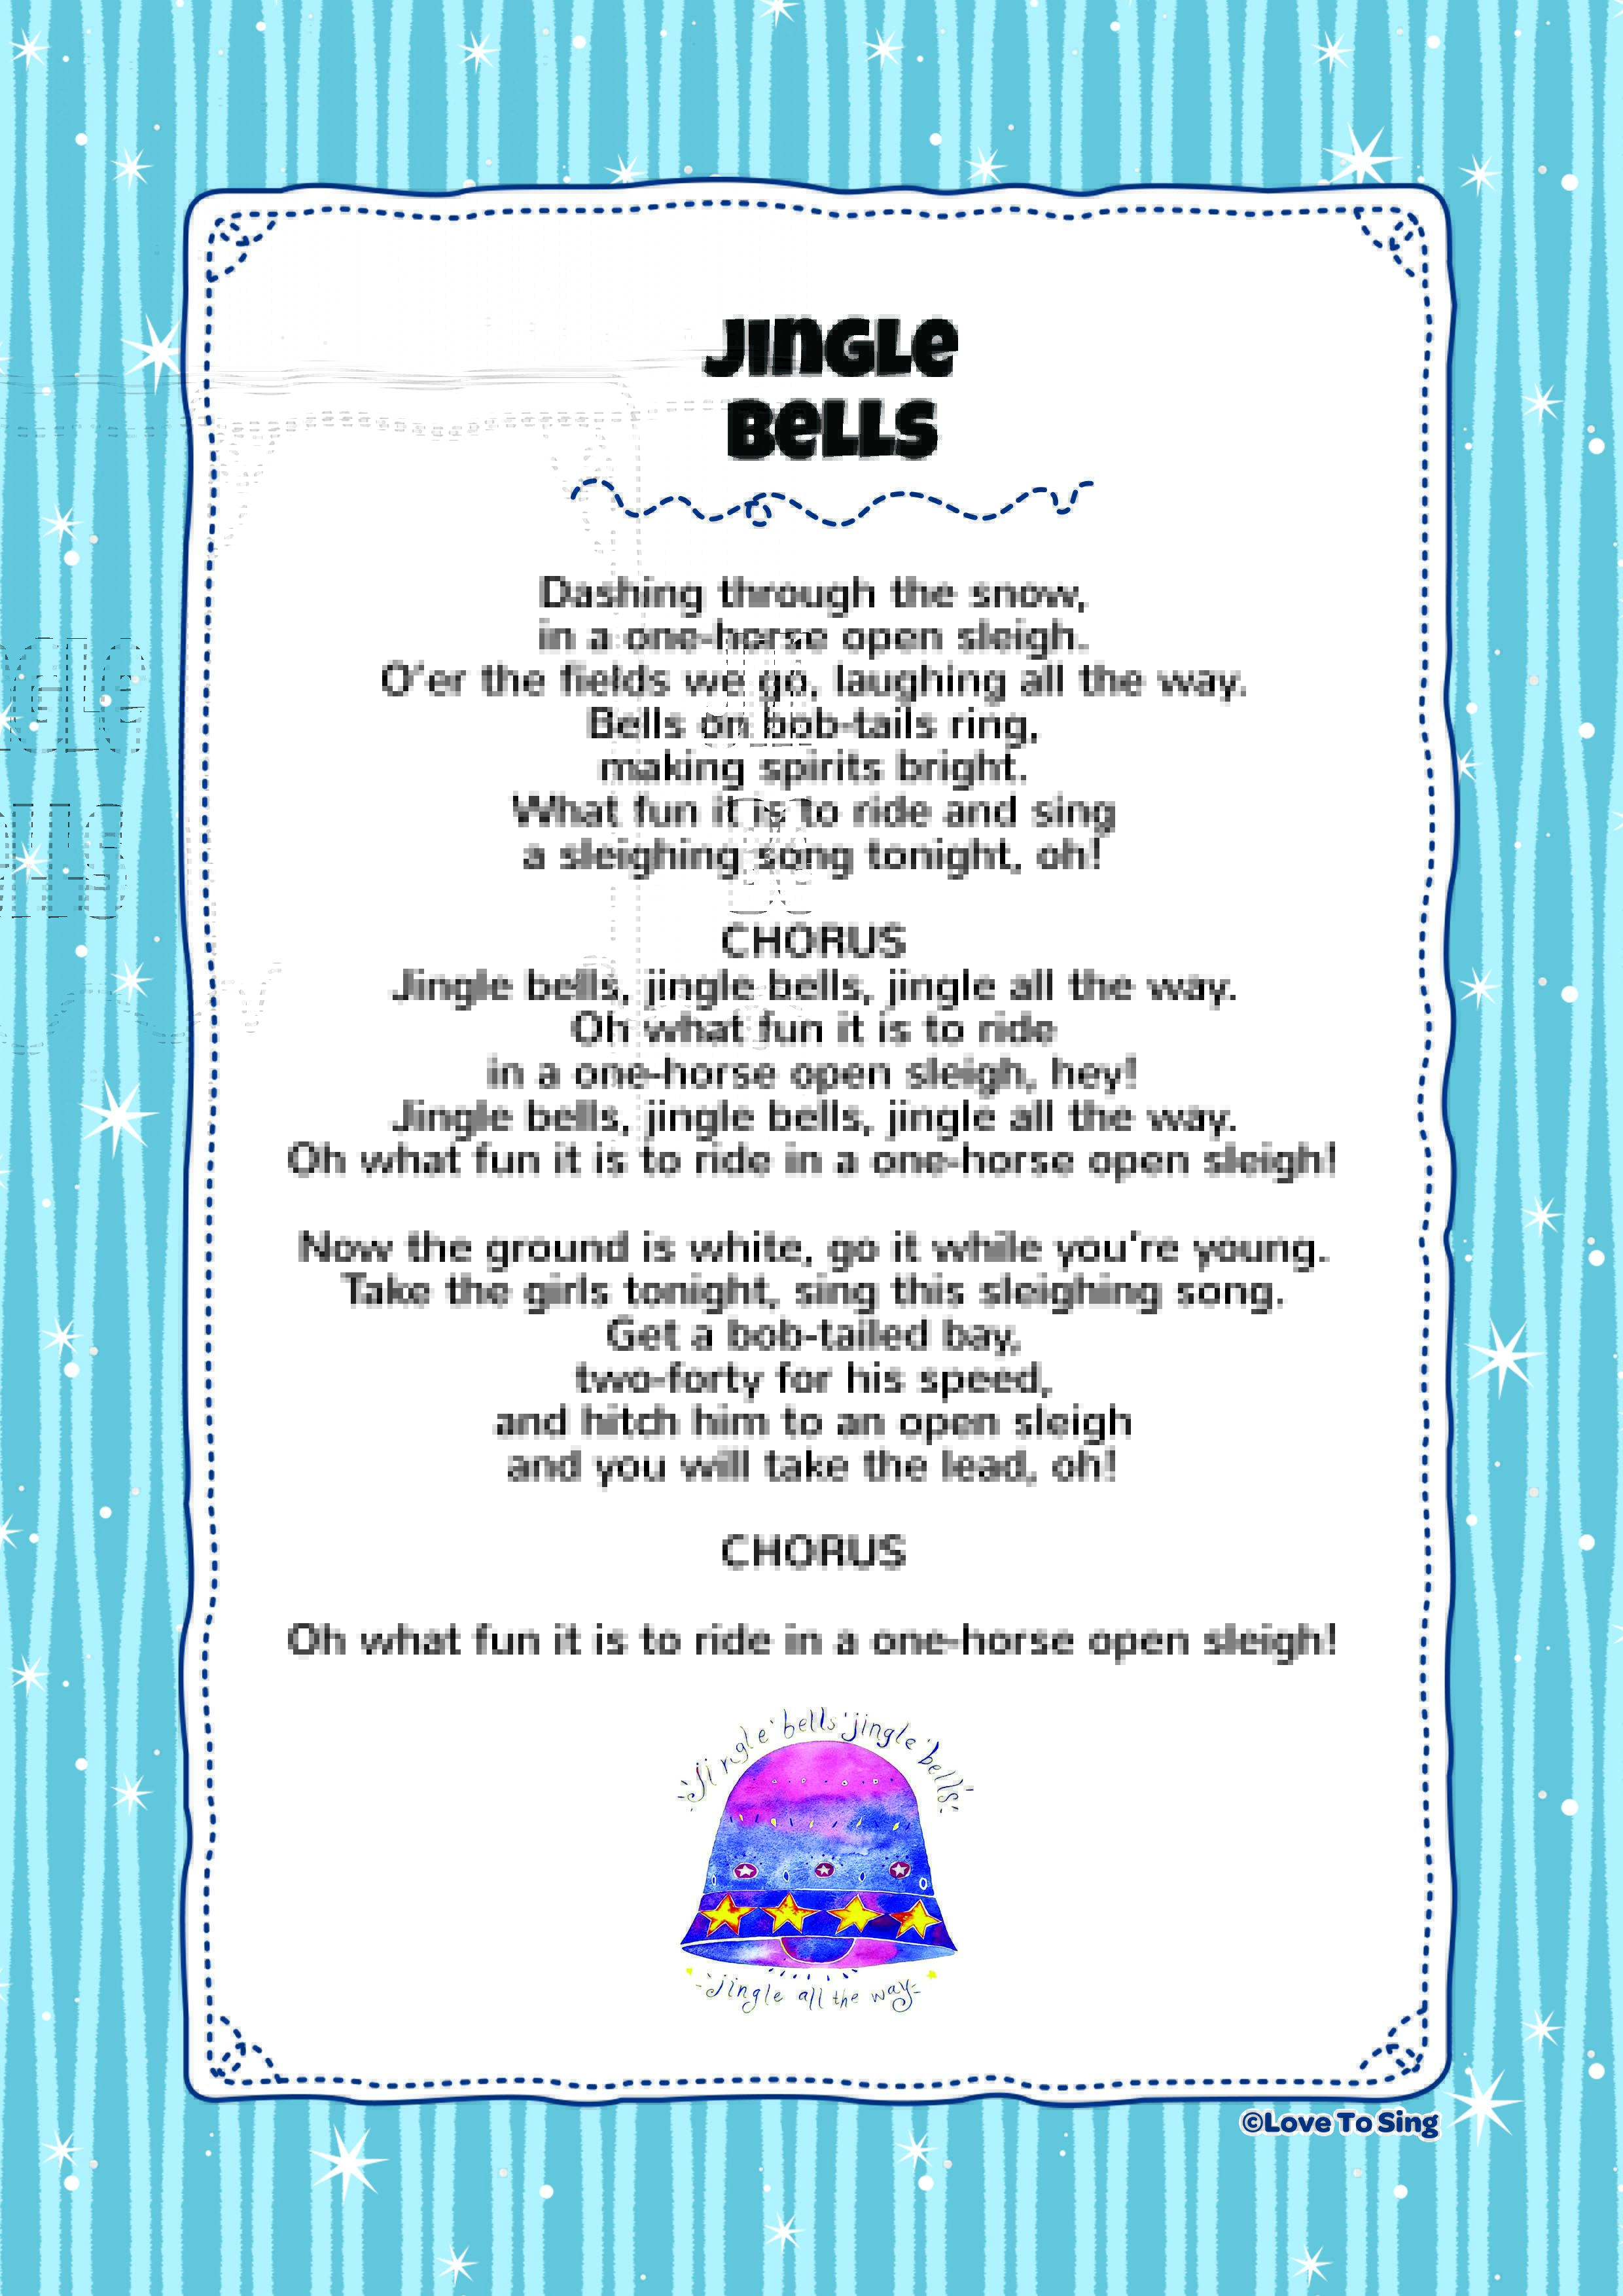 Jingle Bells Kids Video Song with FREE Lyrics & Activities!